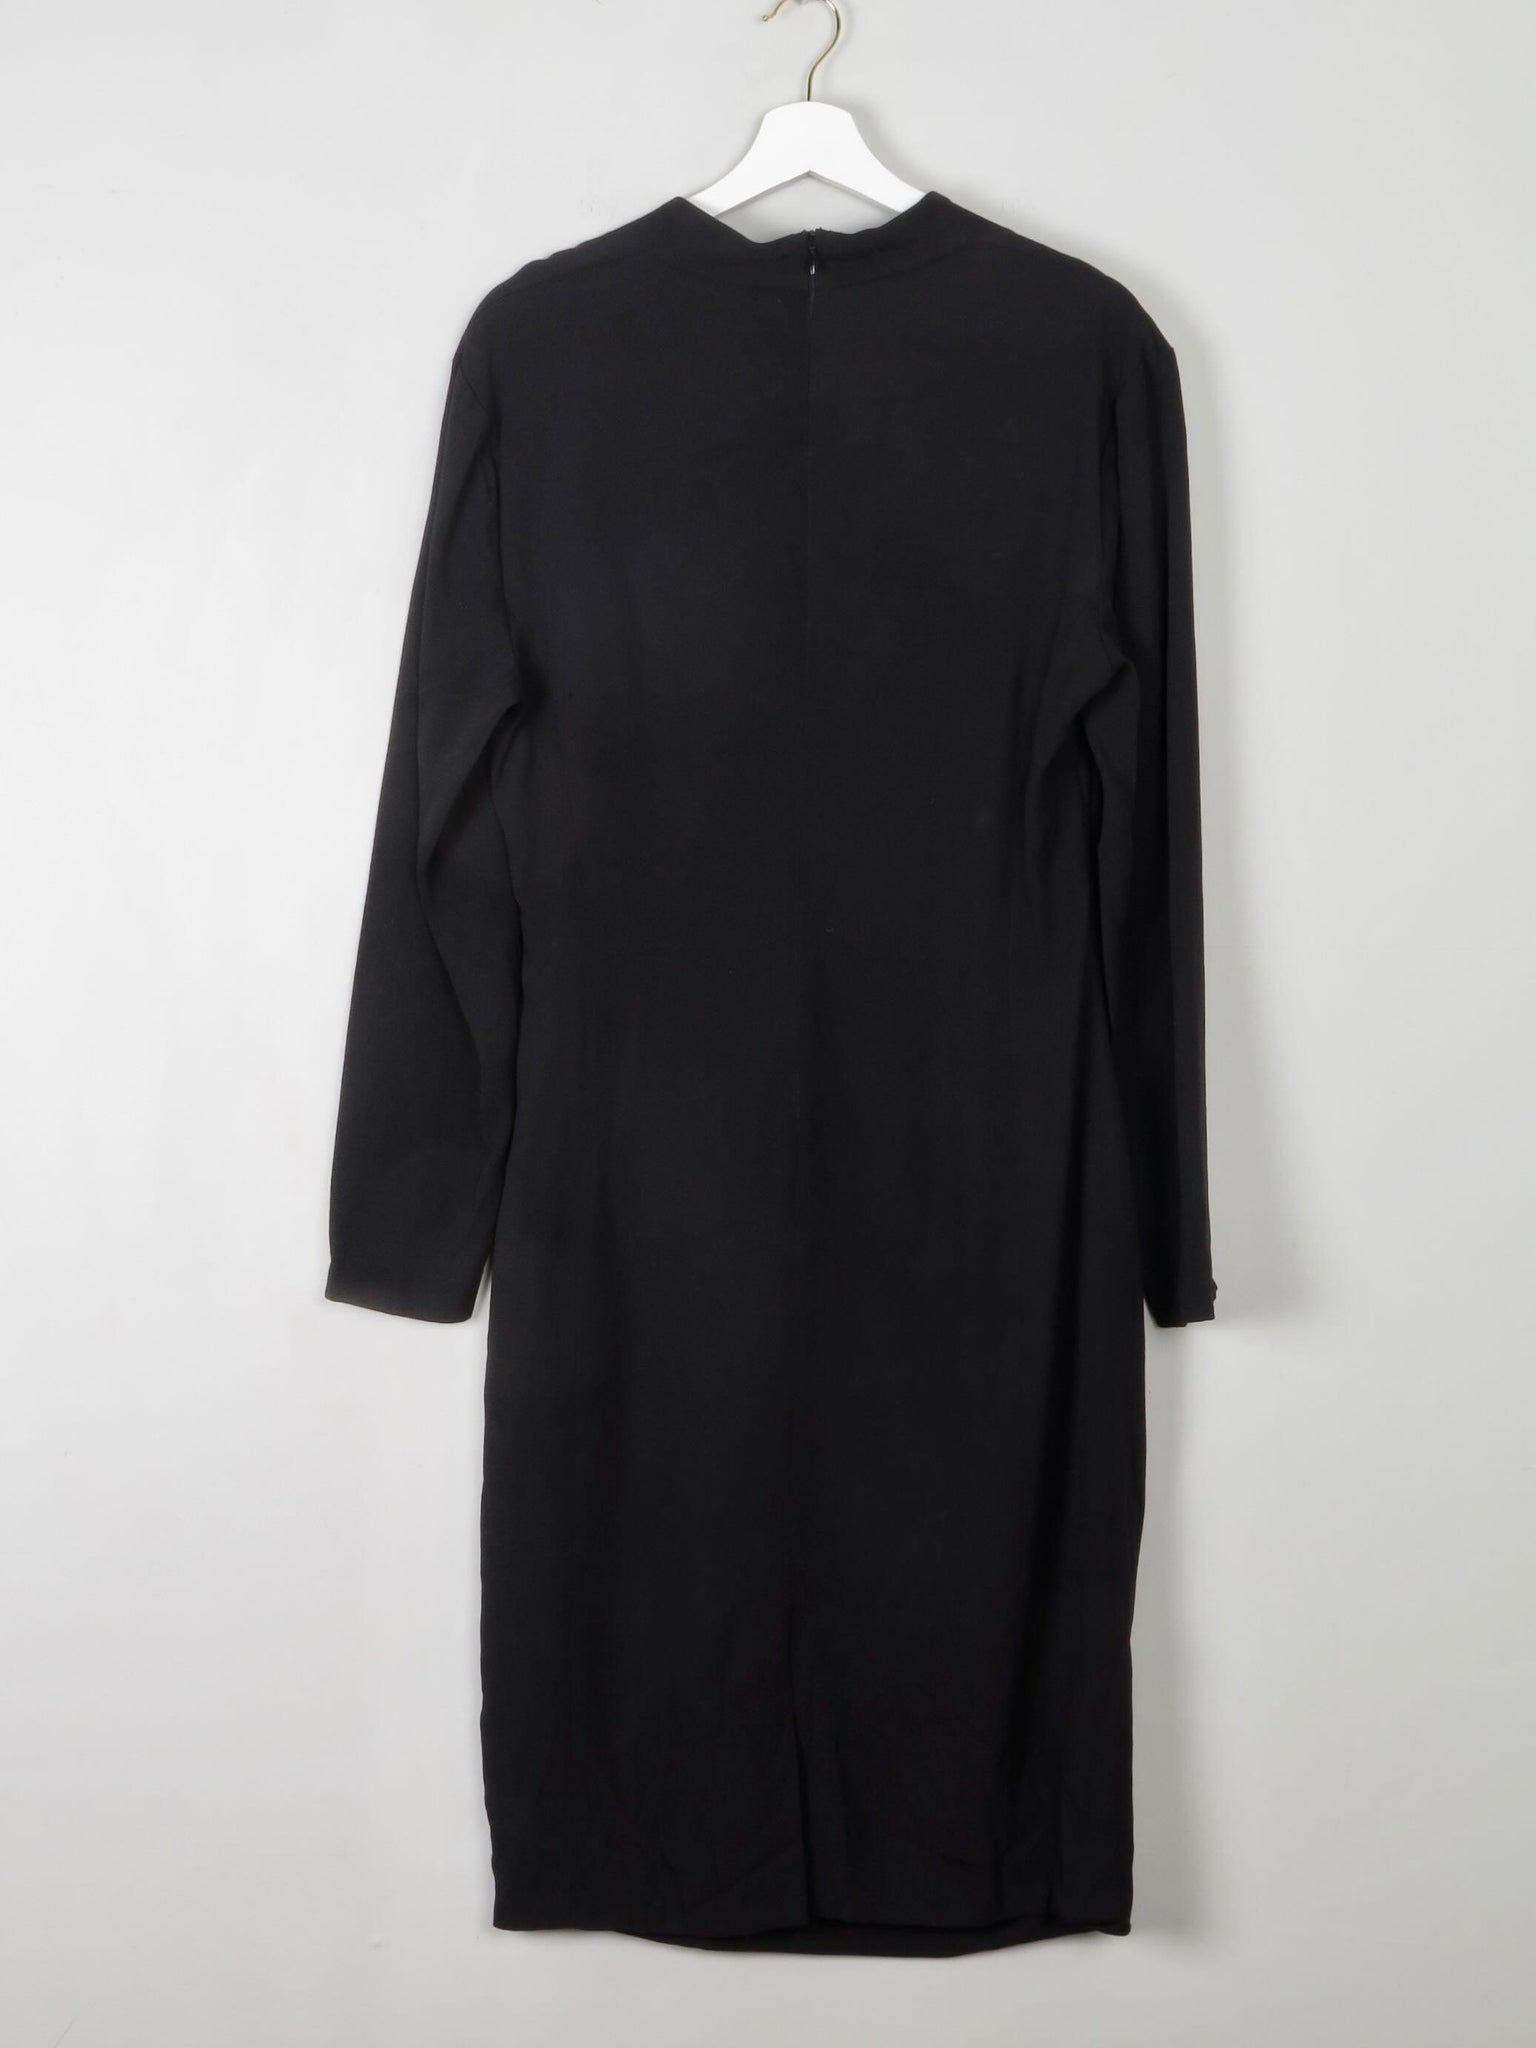 Black Vintage Draped Dress M - The Harlequin